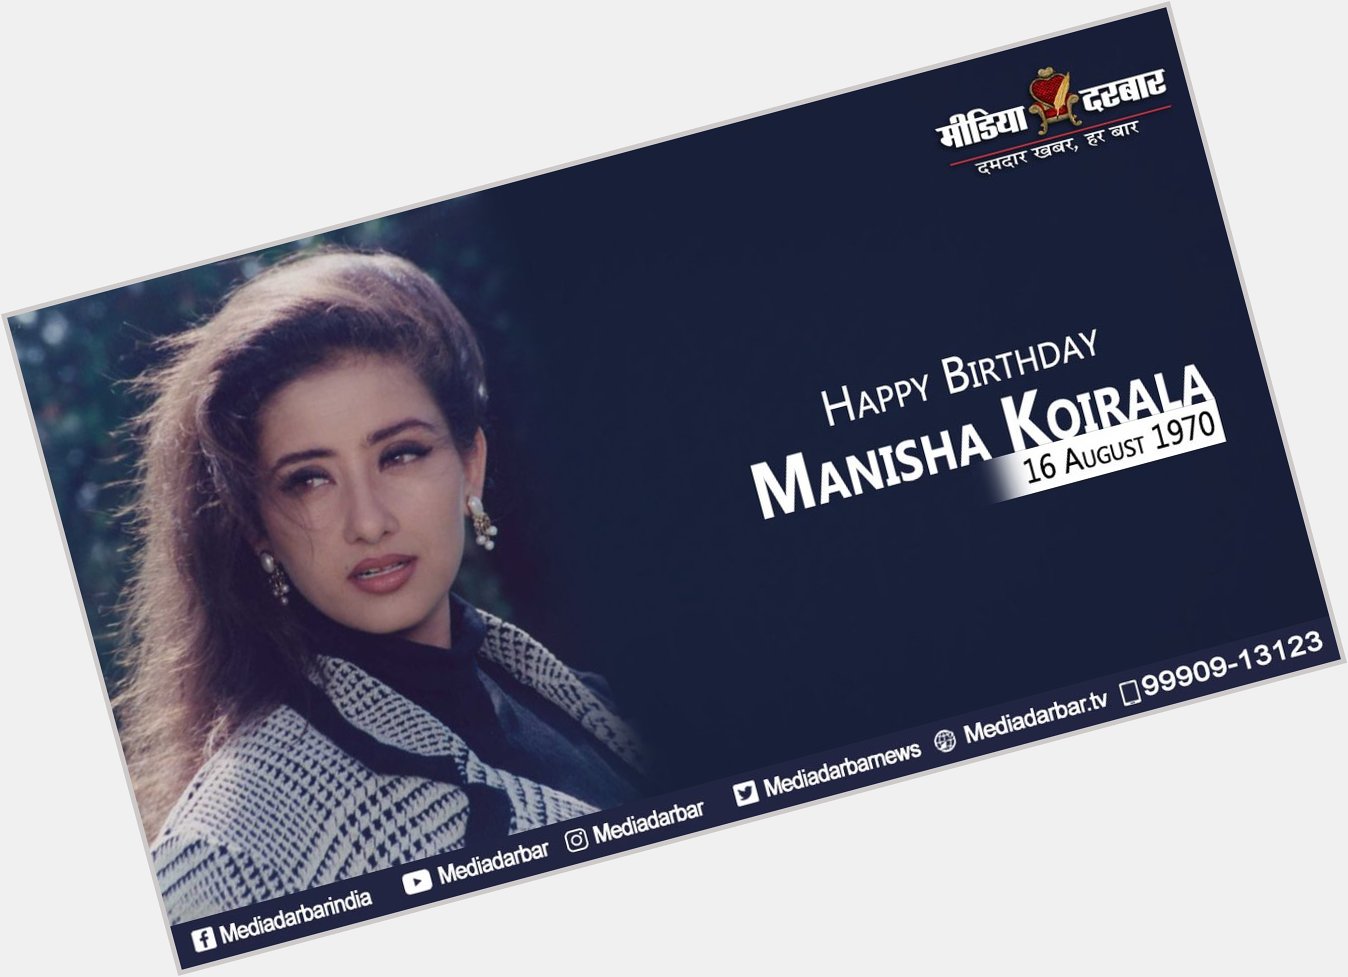 Wishing Happy Birthday To Manisha Koirala  